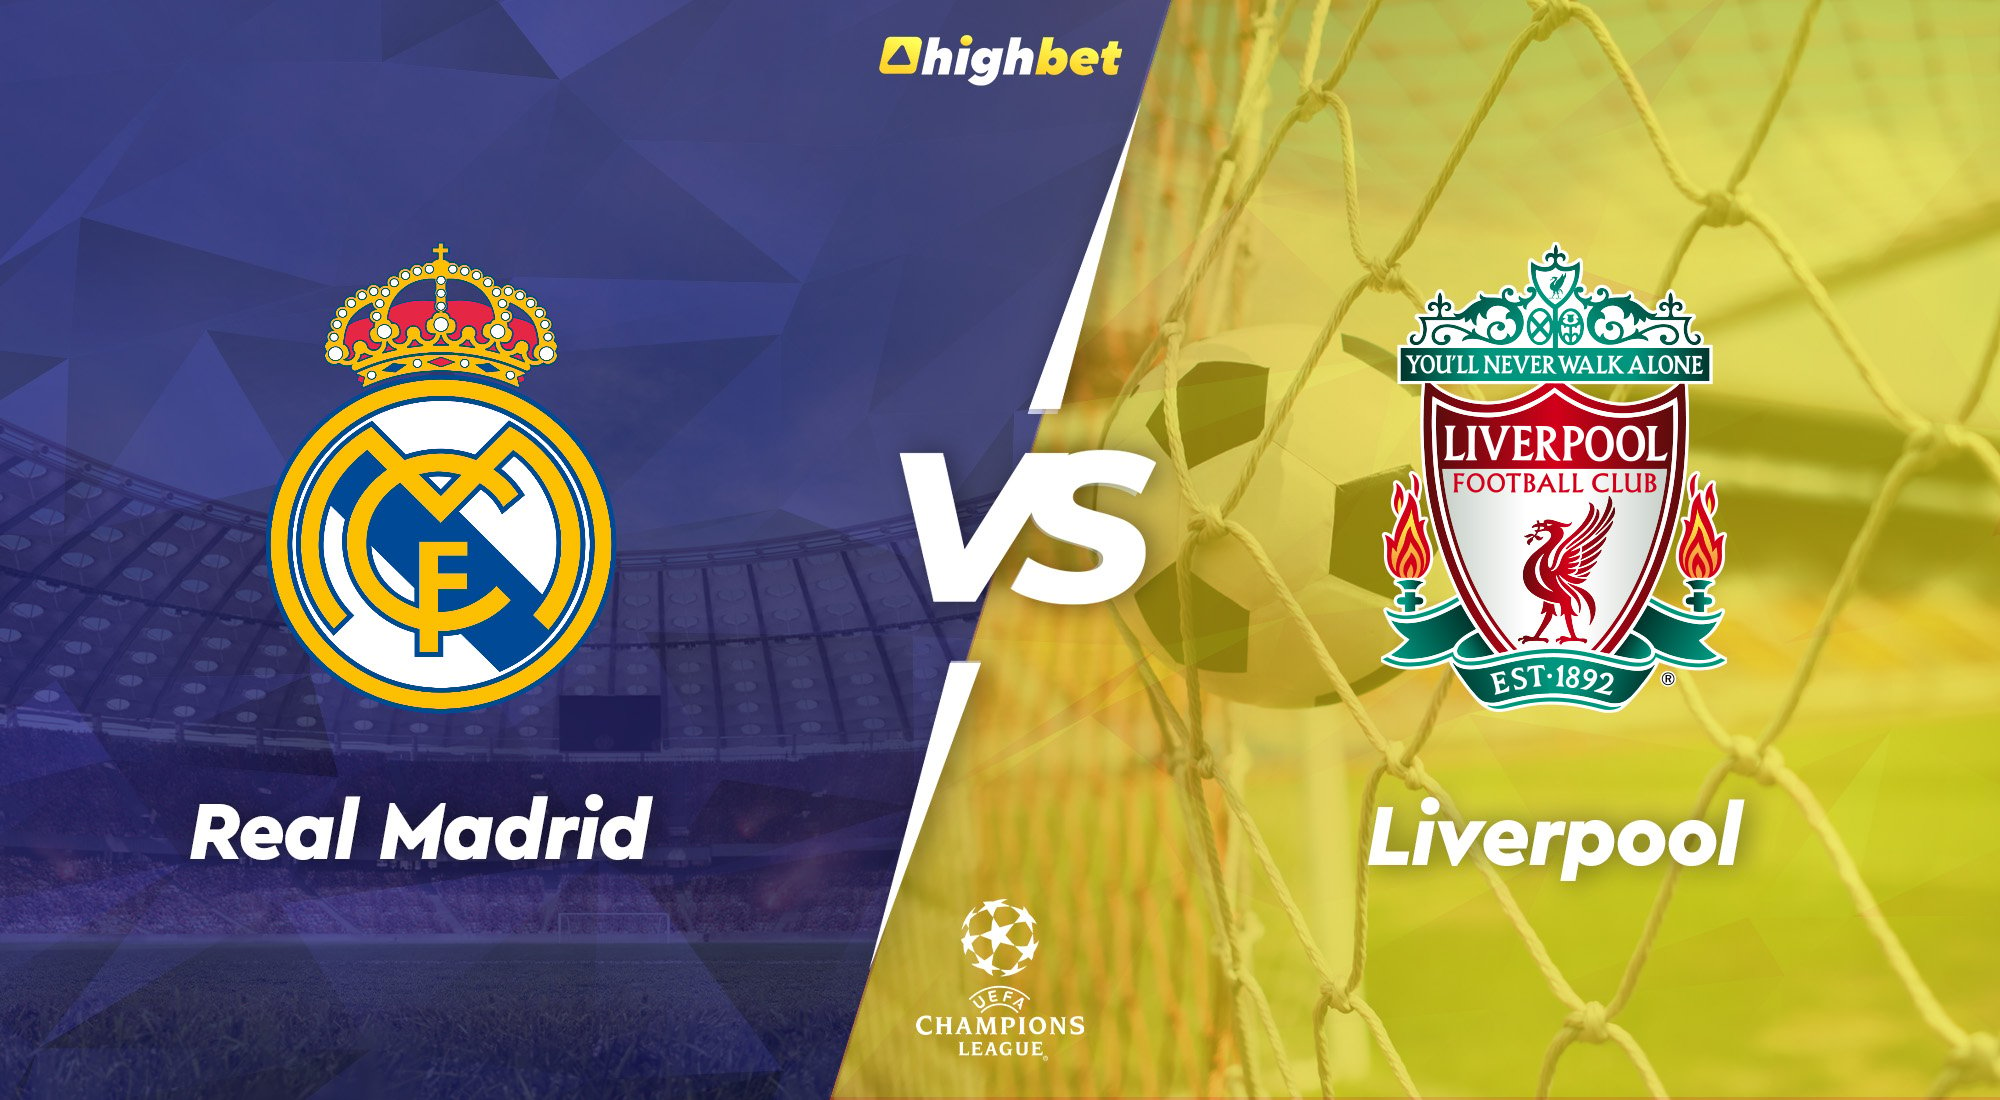 Real Madrid vs Liverpool - highbet UEFA Champions League Pre-Match Analysis